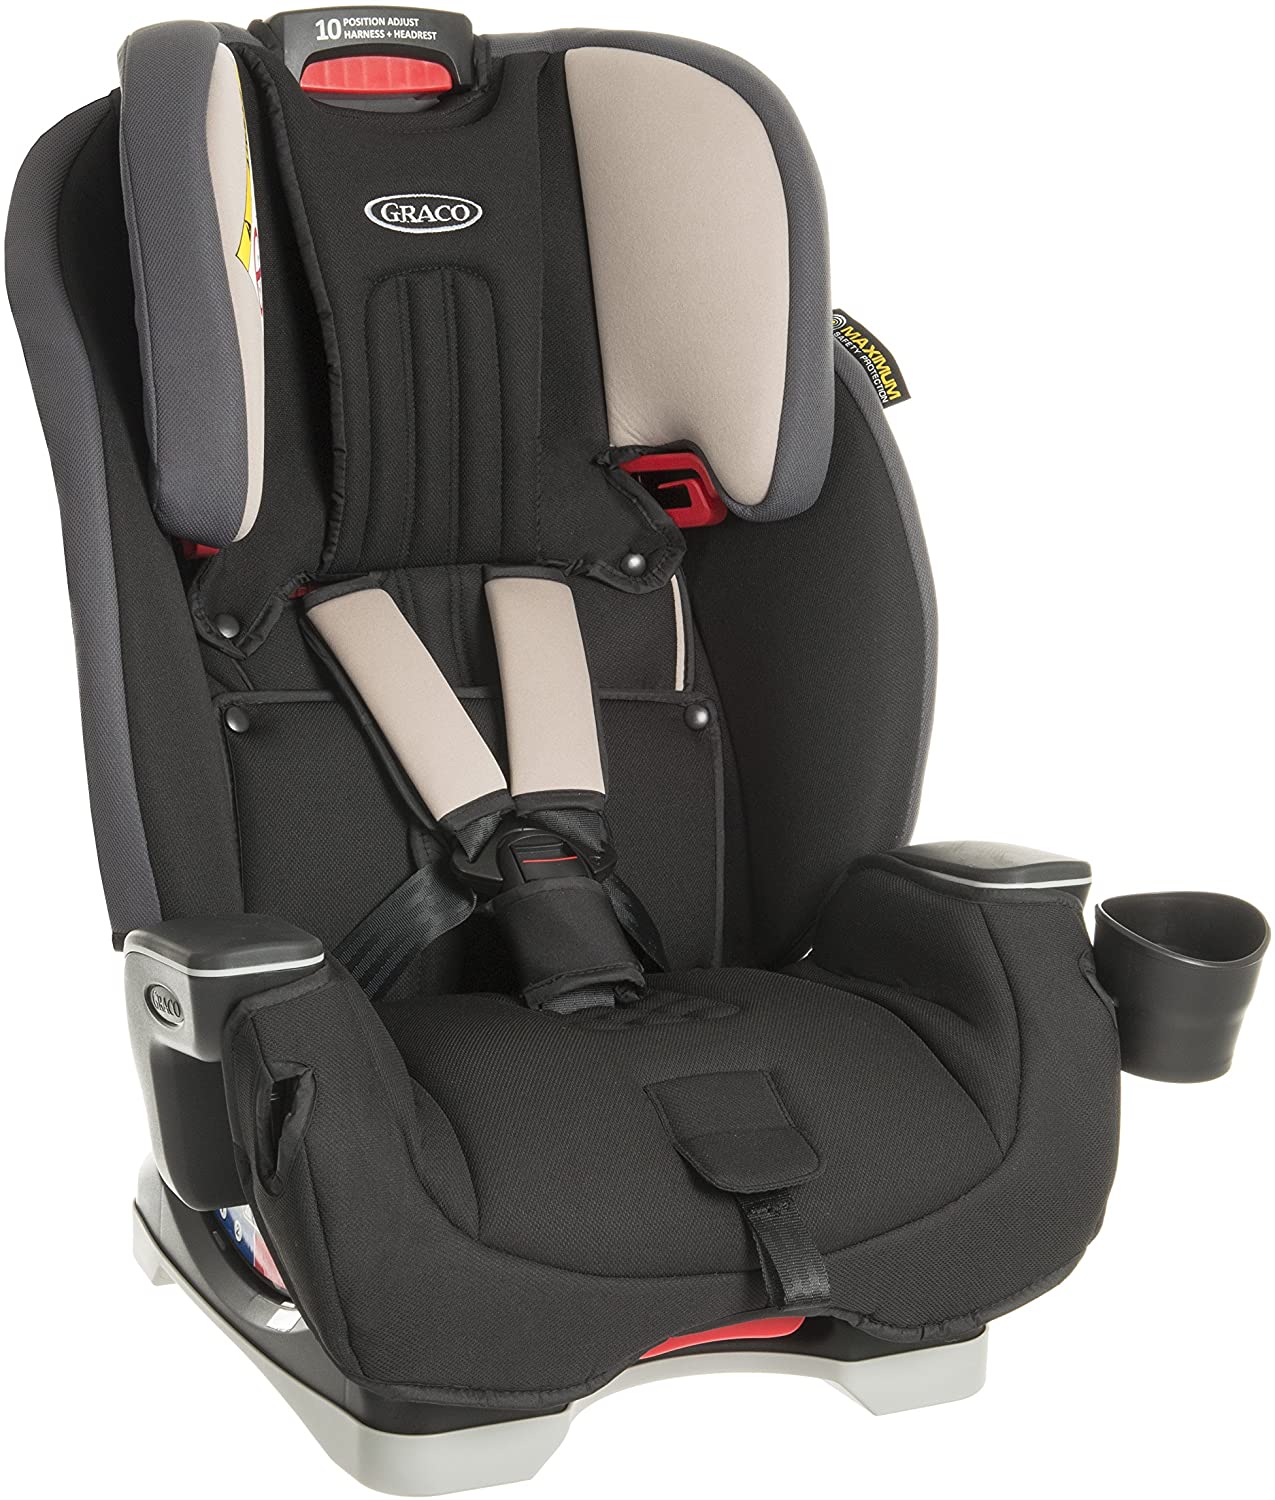 Graco-milestone-toddler-car-seats